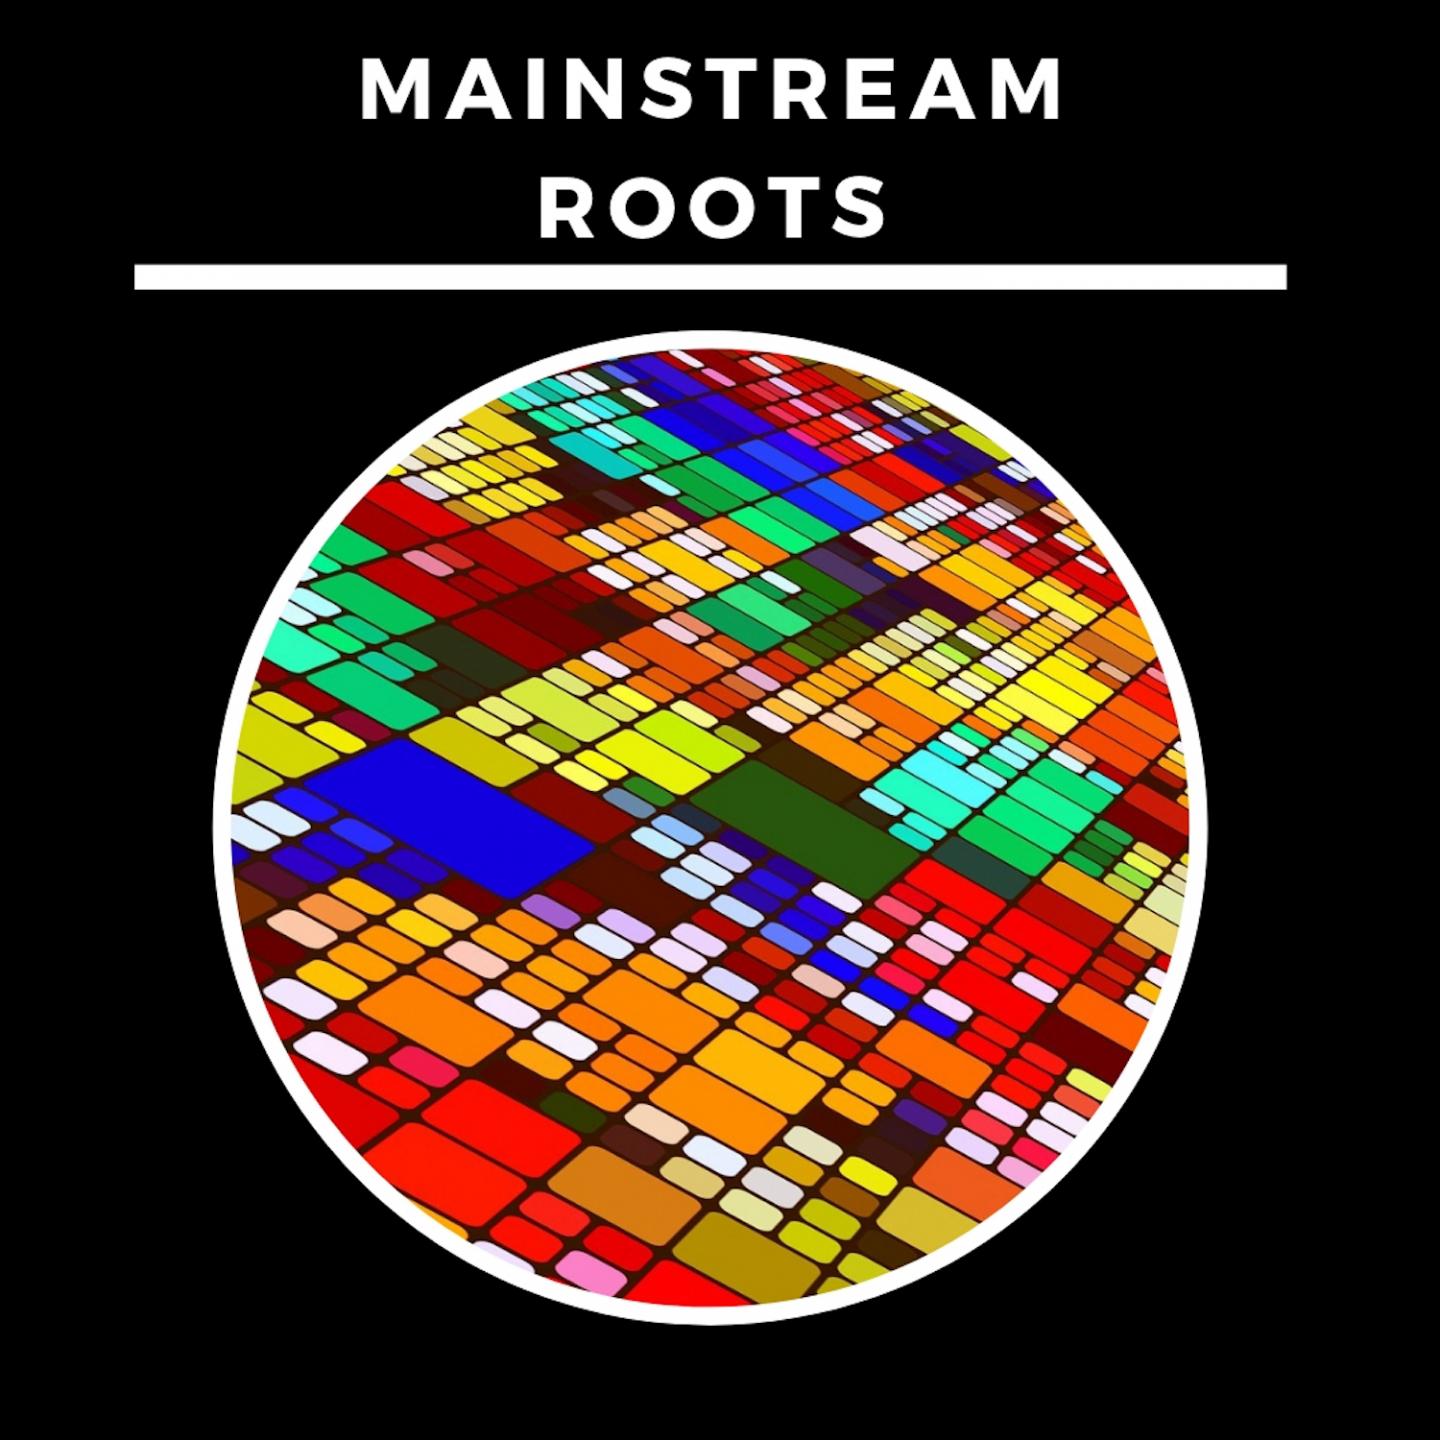 Mainstream Roots